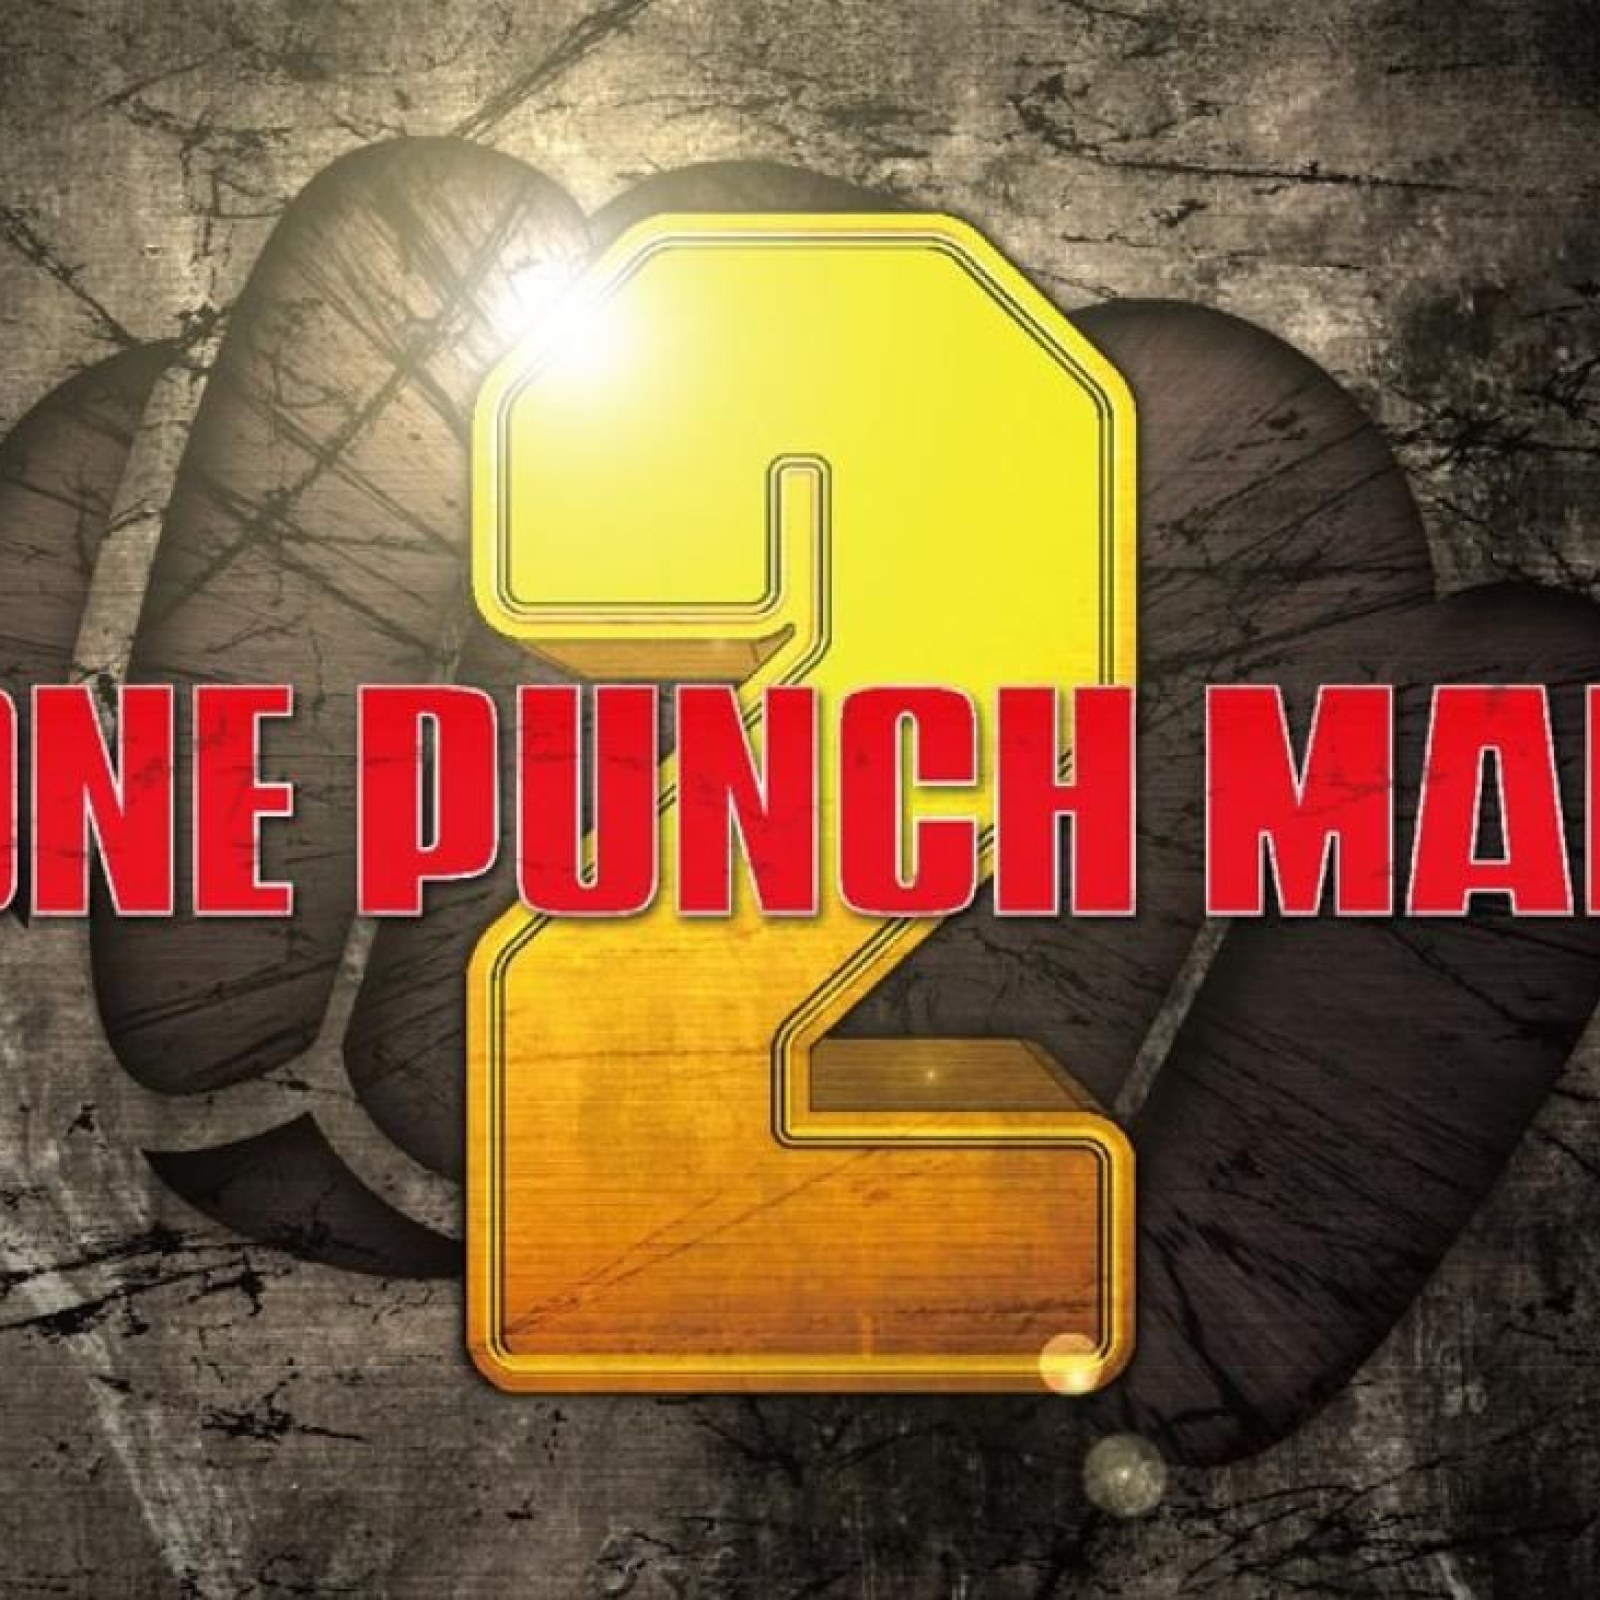 One-Punch Man Season 2 Has Arrived on Hulu